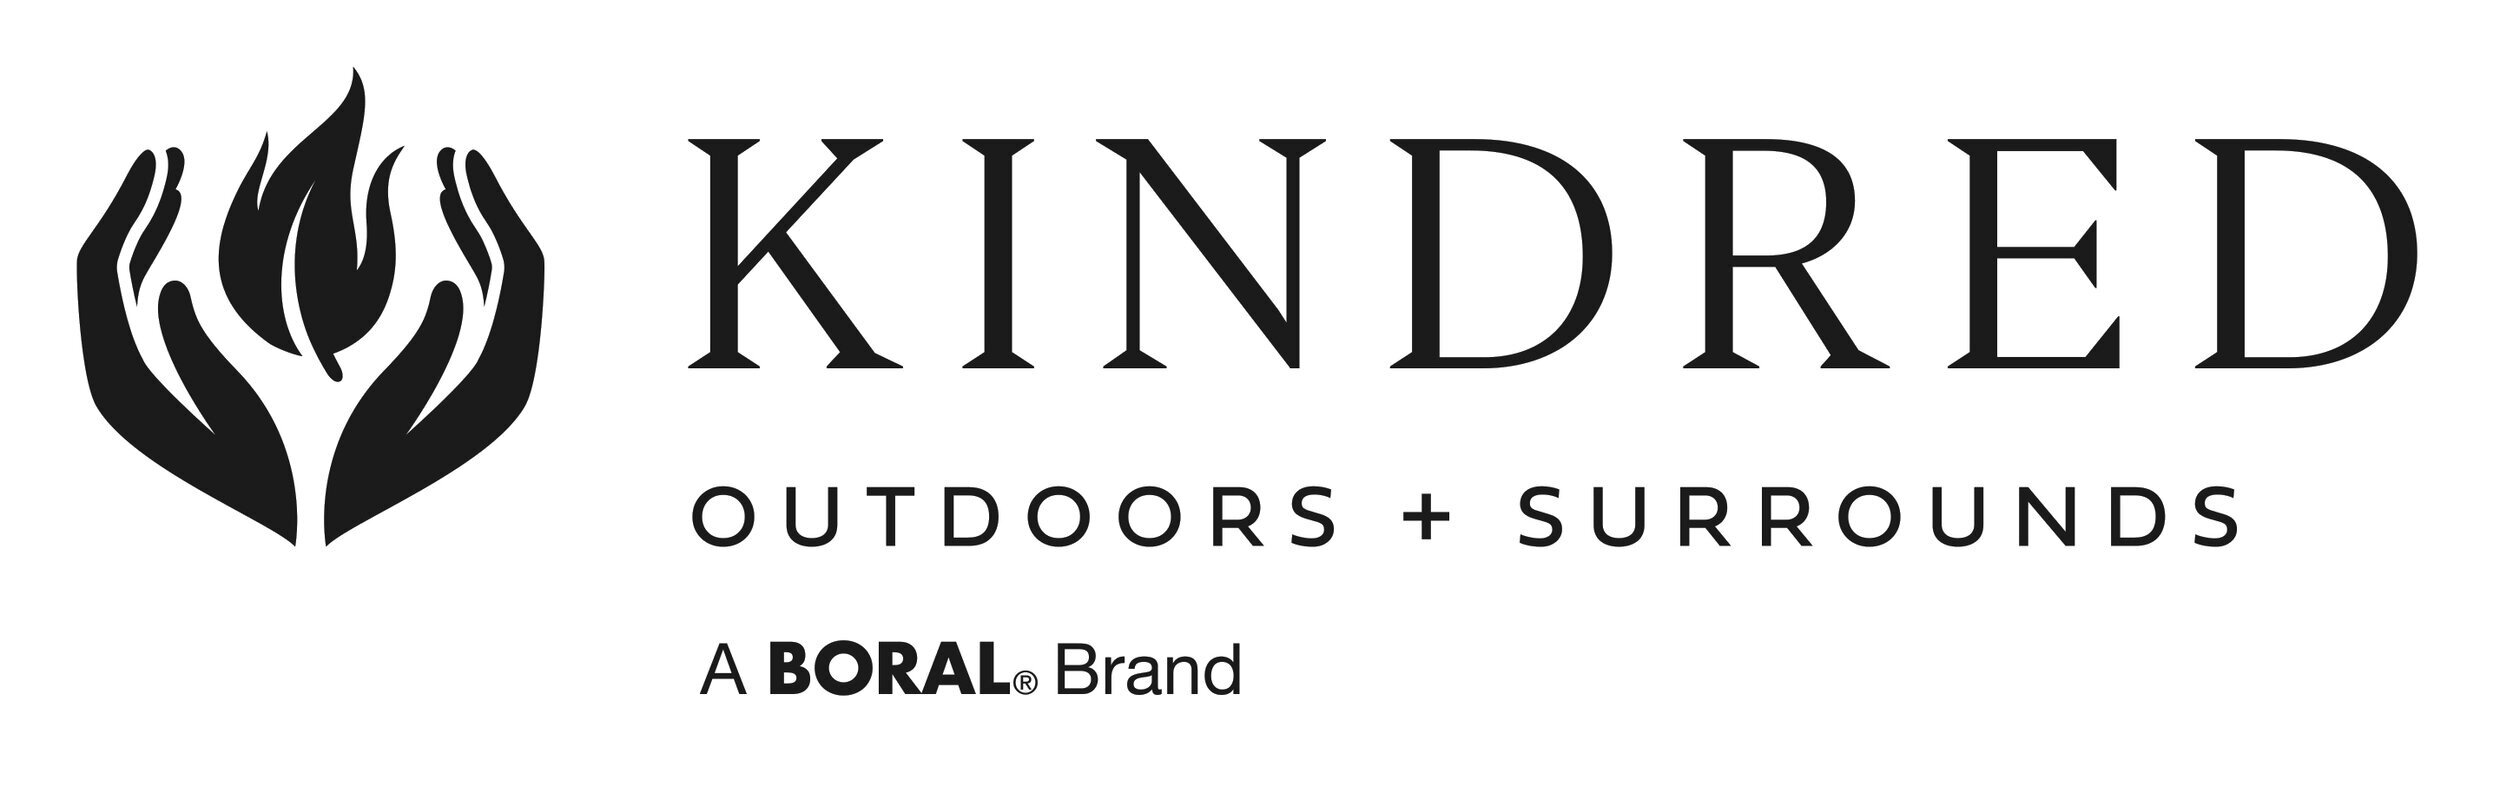 Kindred+Outdoors+%2B+Surrounds+Logo_bw+300dpi.jpg